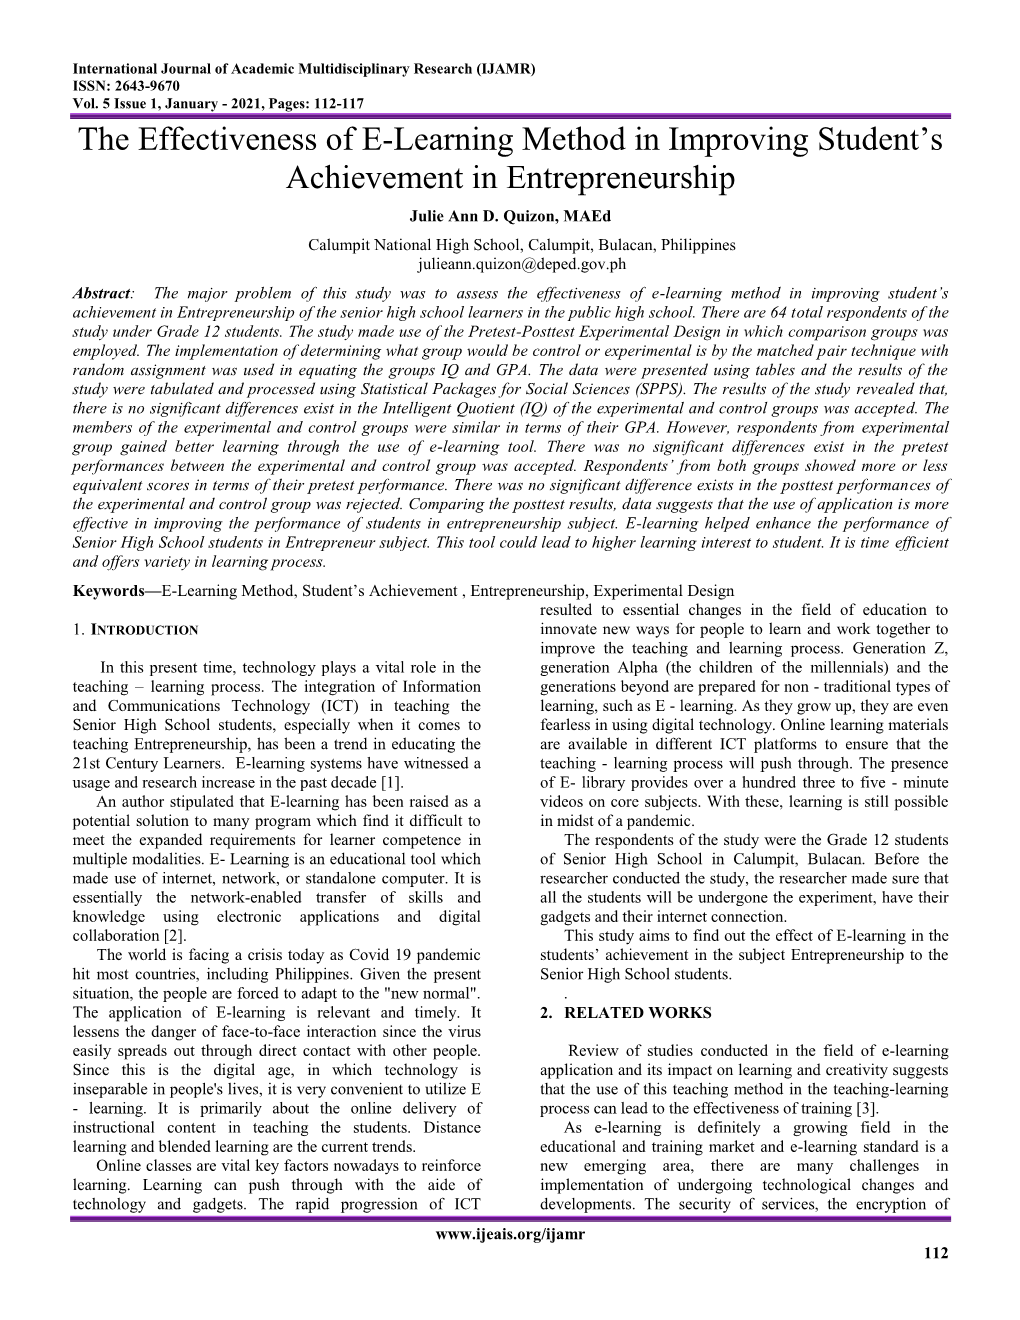 The Effectiveness of E-Learning Method in Improving Student's Achievement in Entrepreneurship